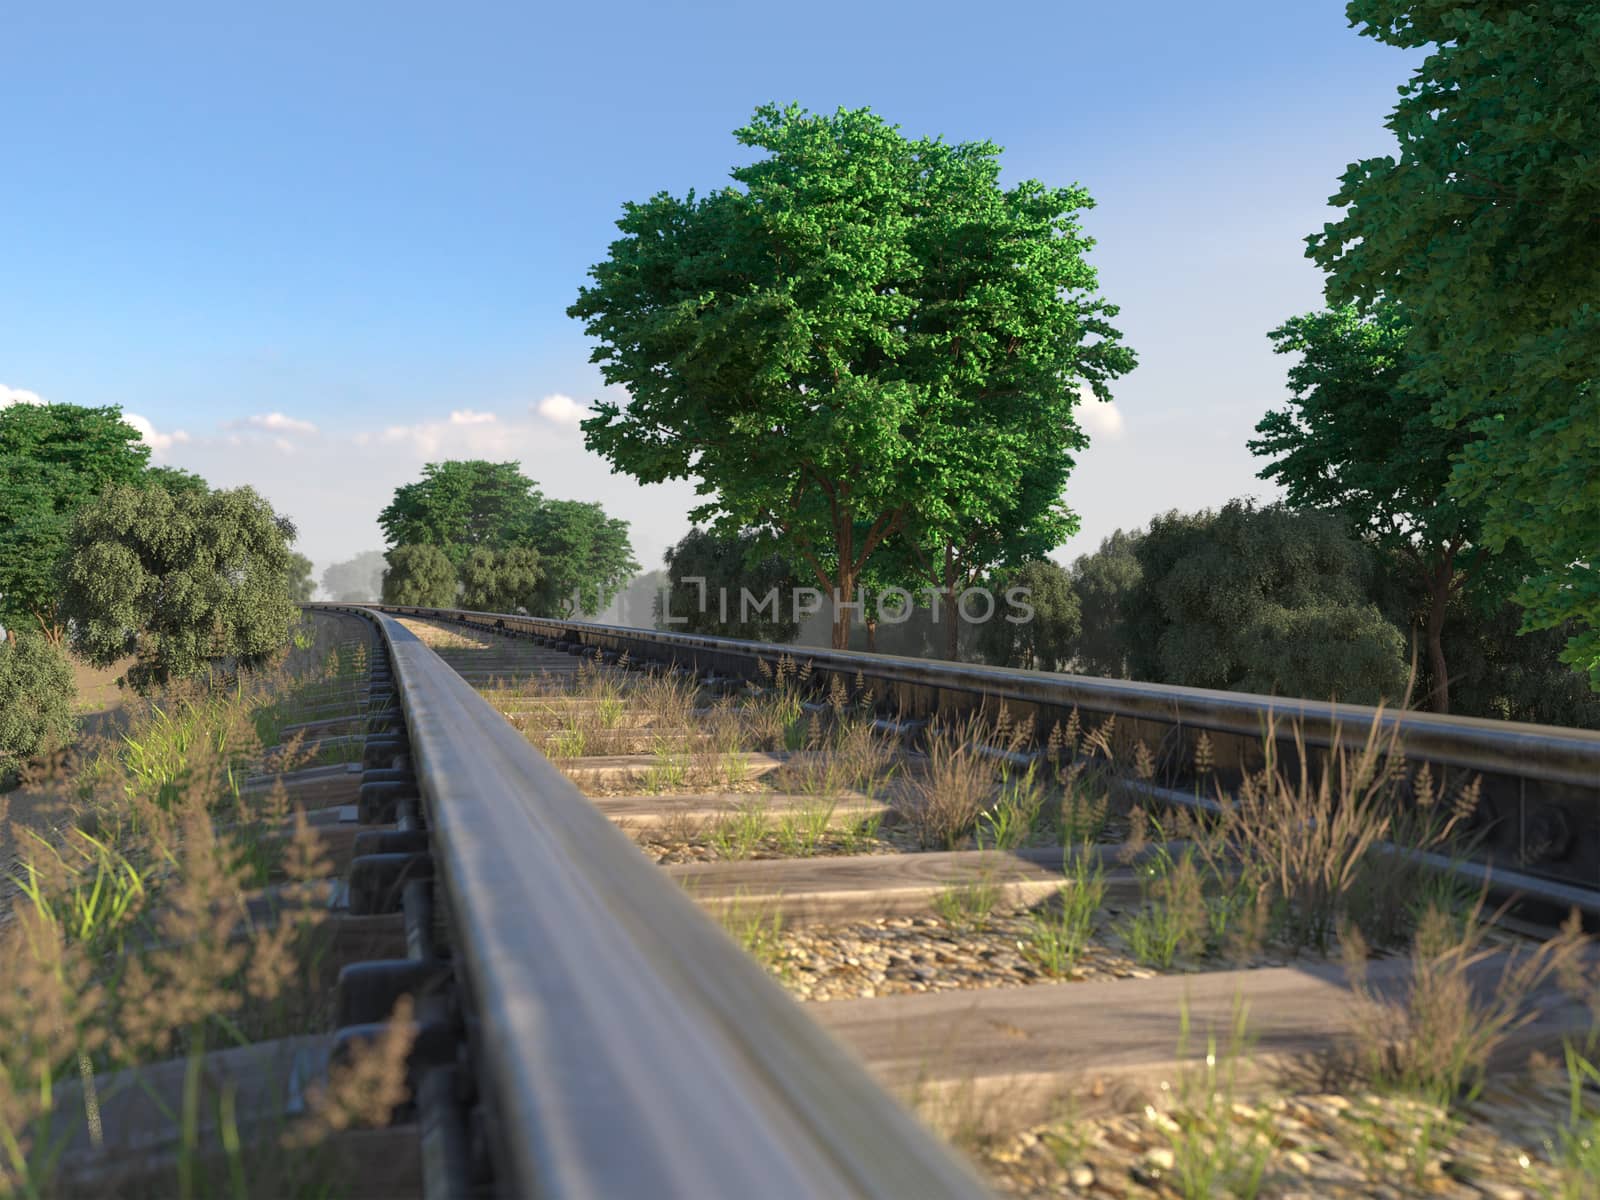 Railway track crossing rural landscape. Travel concept